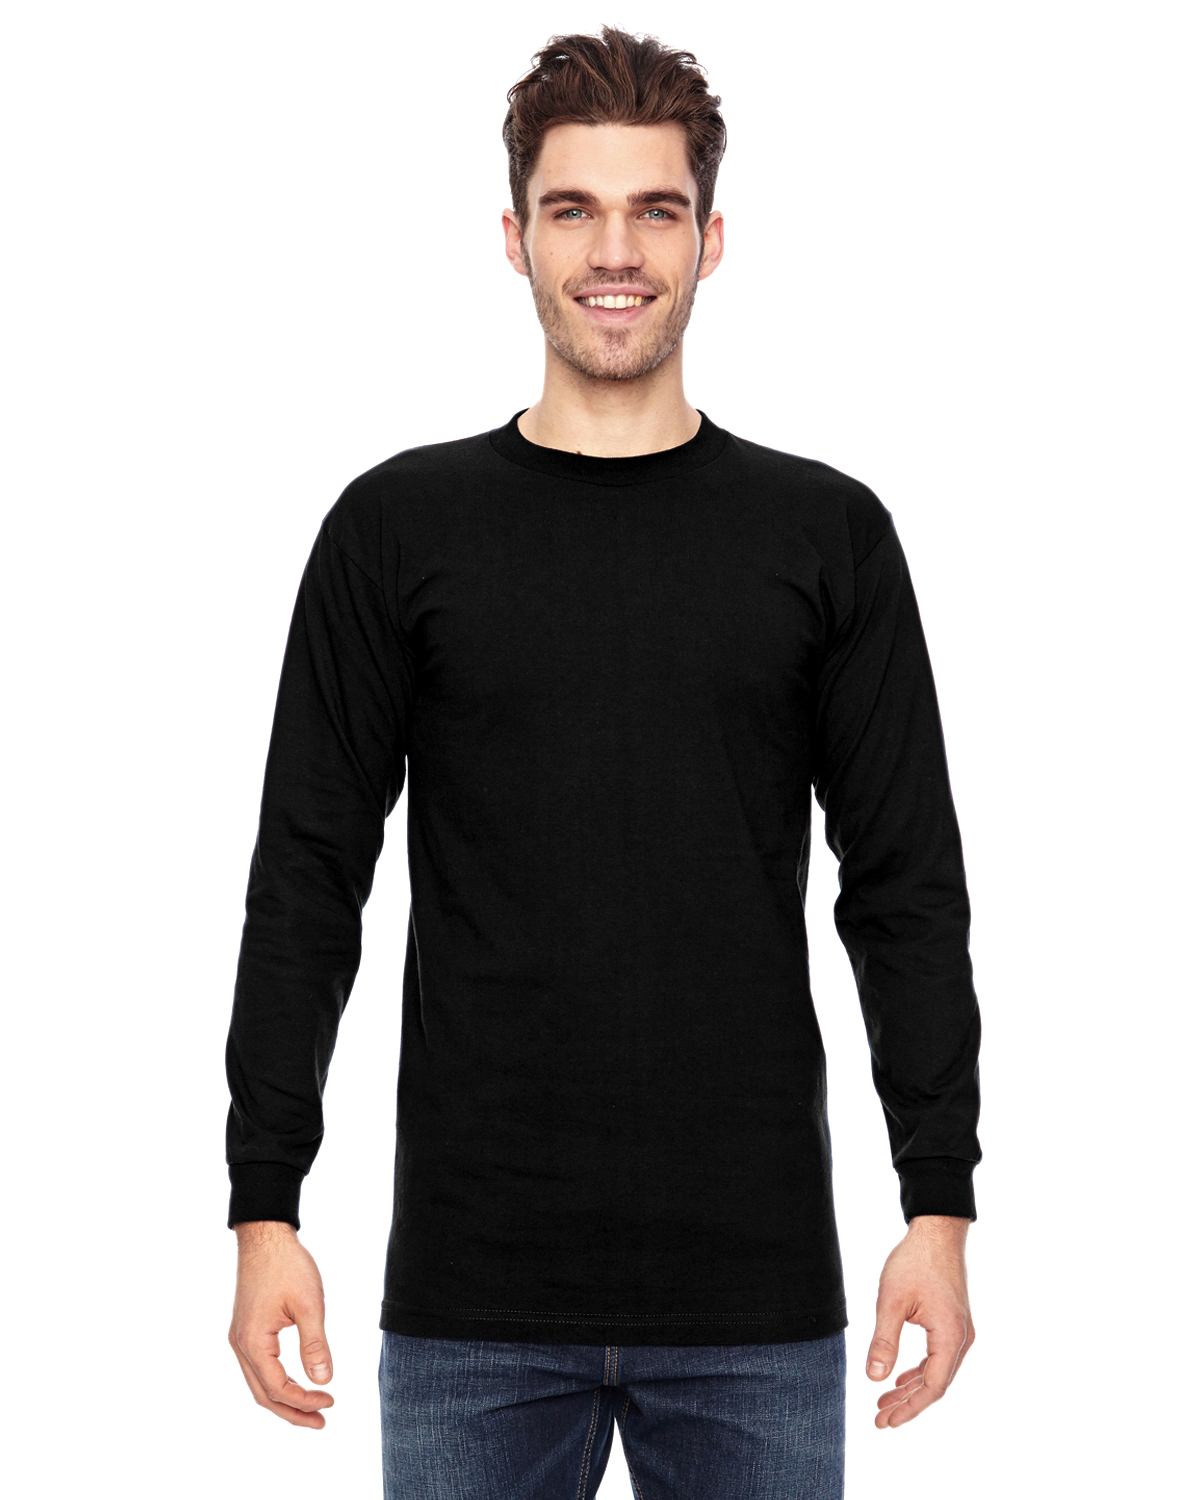 Bayside 6100 Long Sleeve T-Shirt